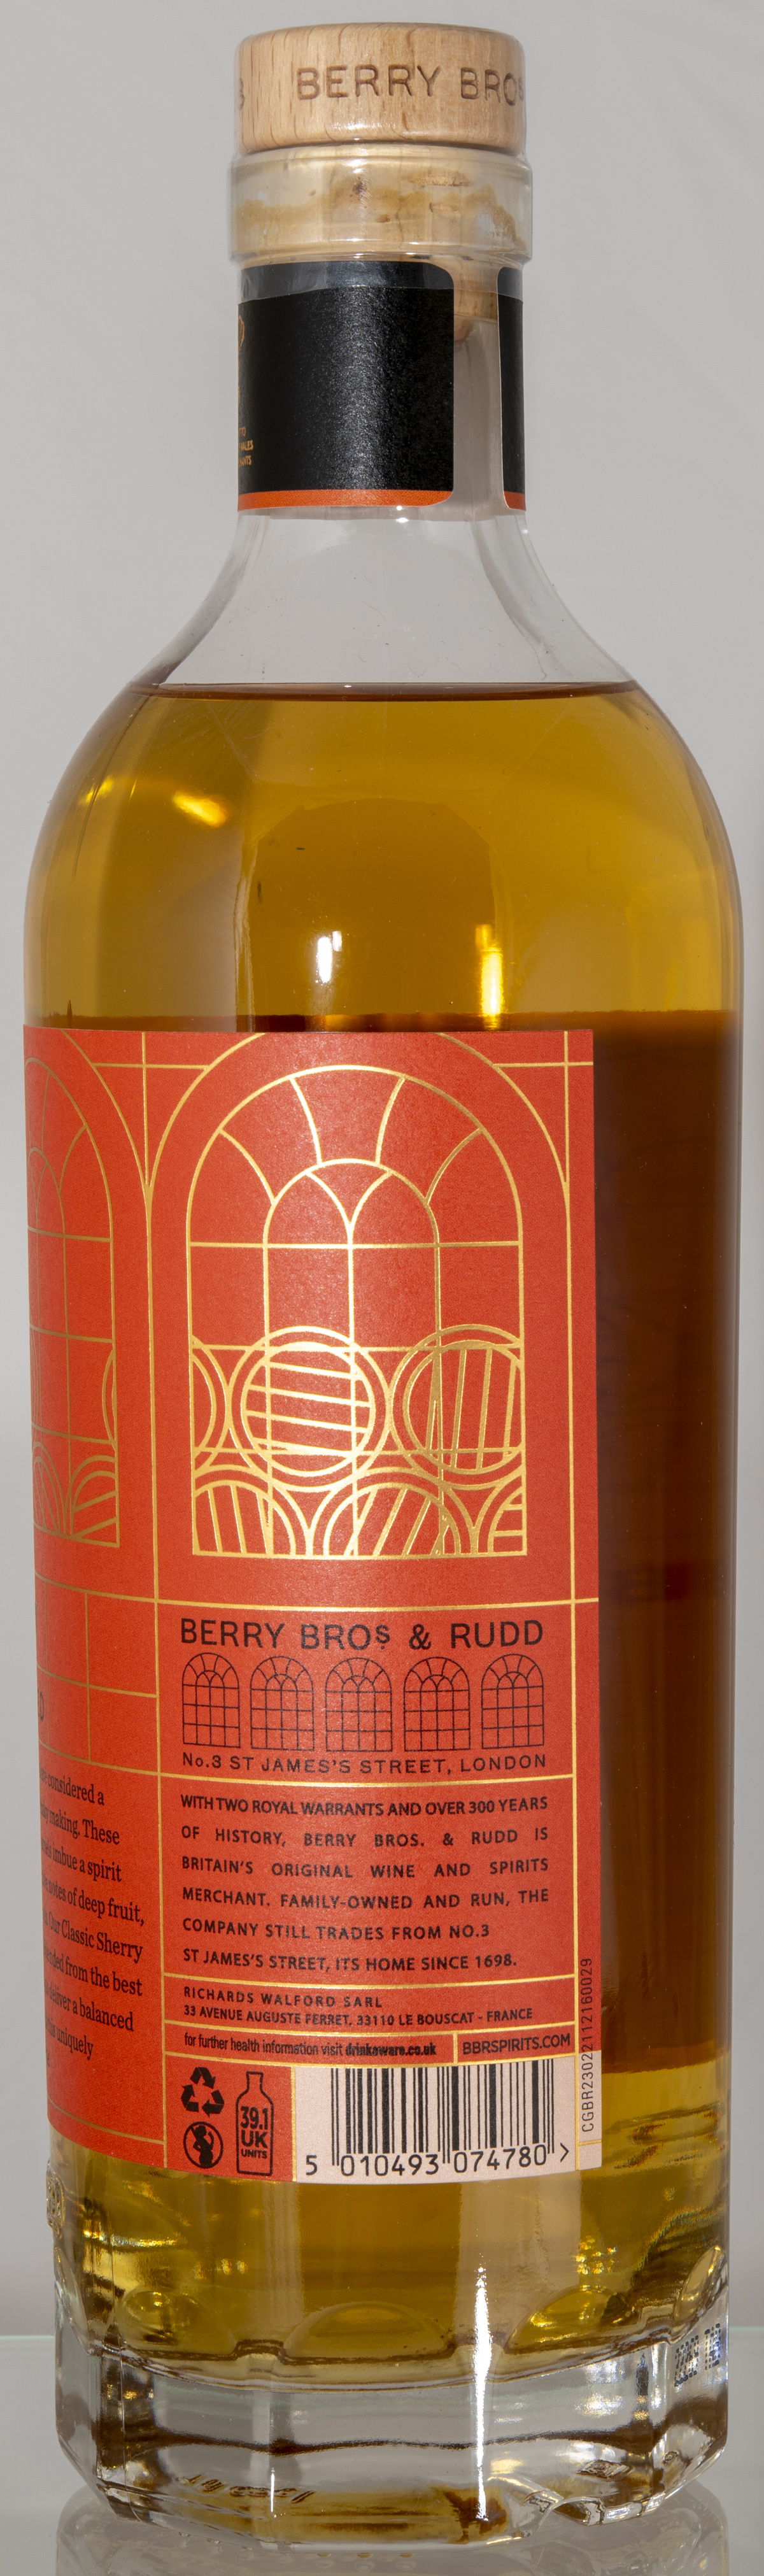 Billede: D85_8310 - Berry Bros and Rudd - Sherry Cask Matured - bottle back.jpg